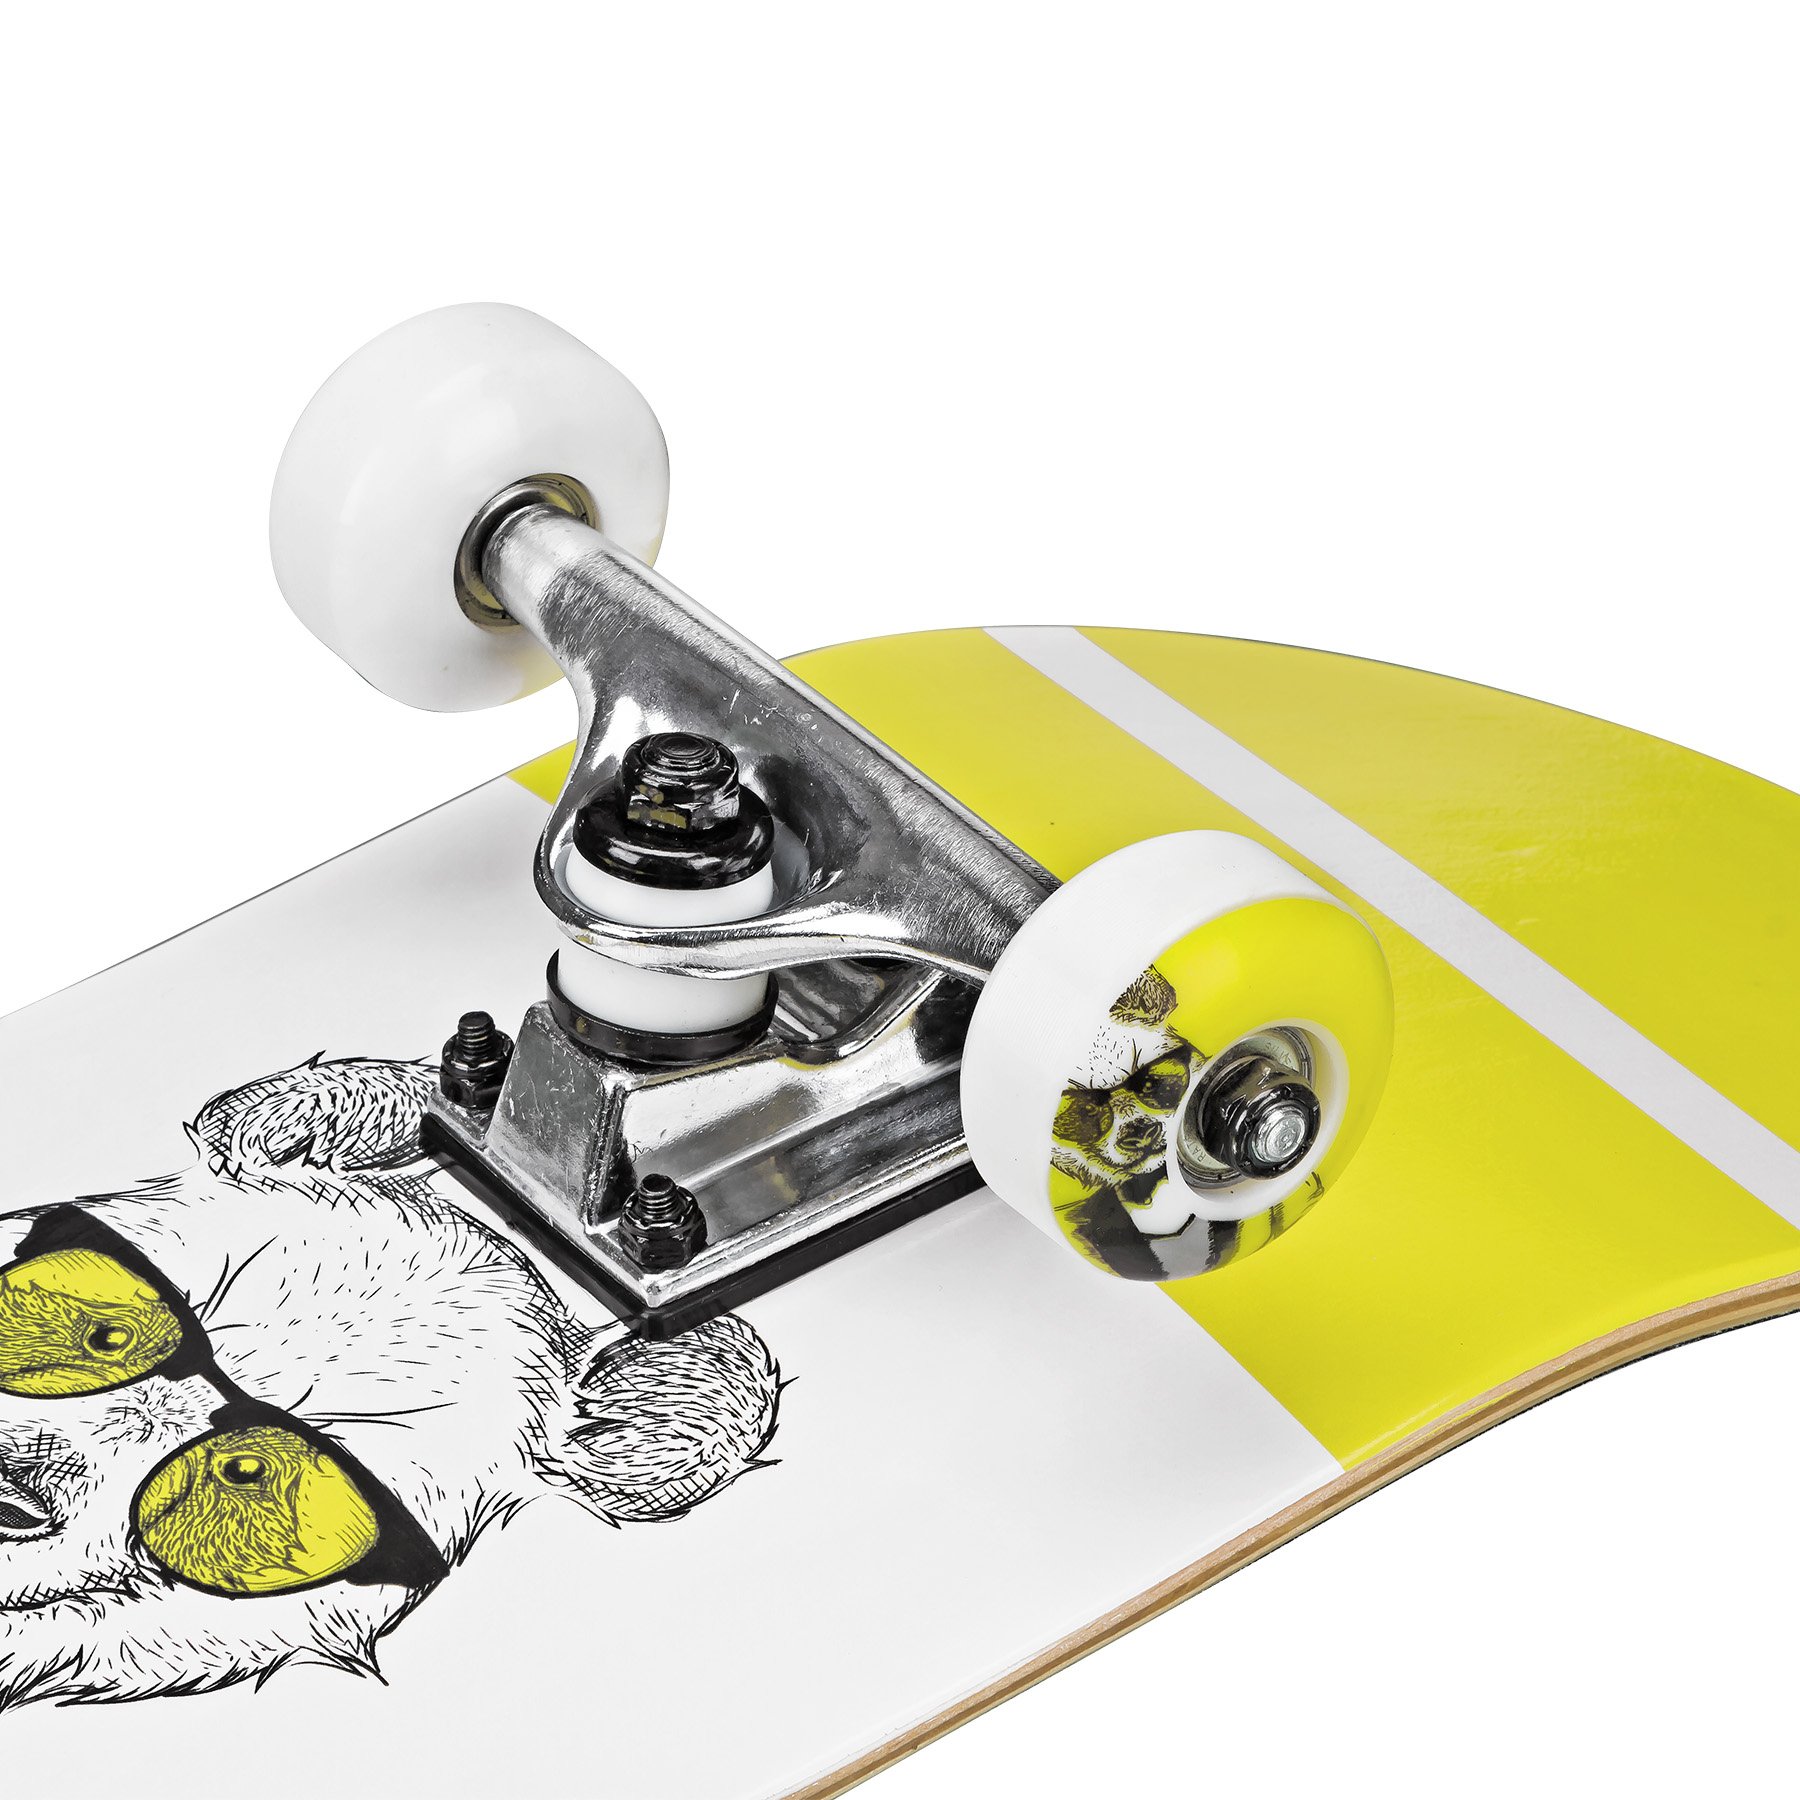 Roller Derby Deluxe Series Complete Skateboard for Kids, Teens, Adults, Beginners 31